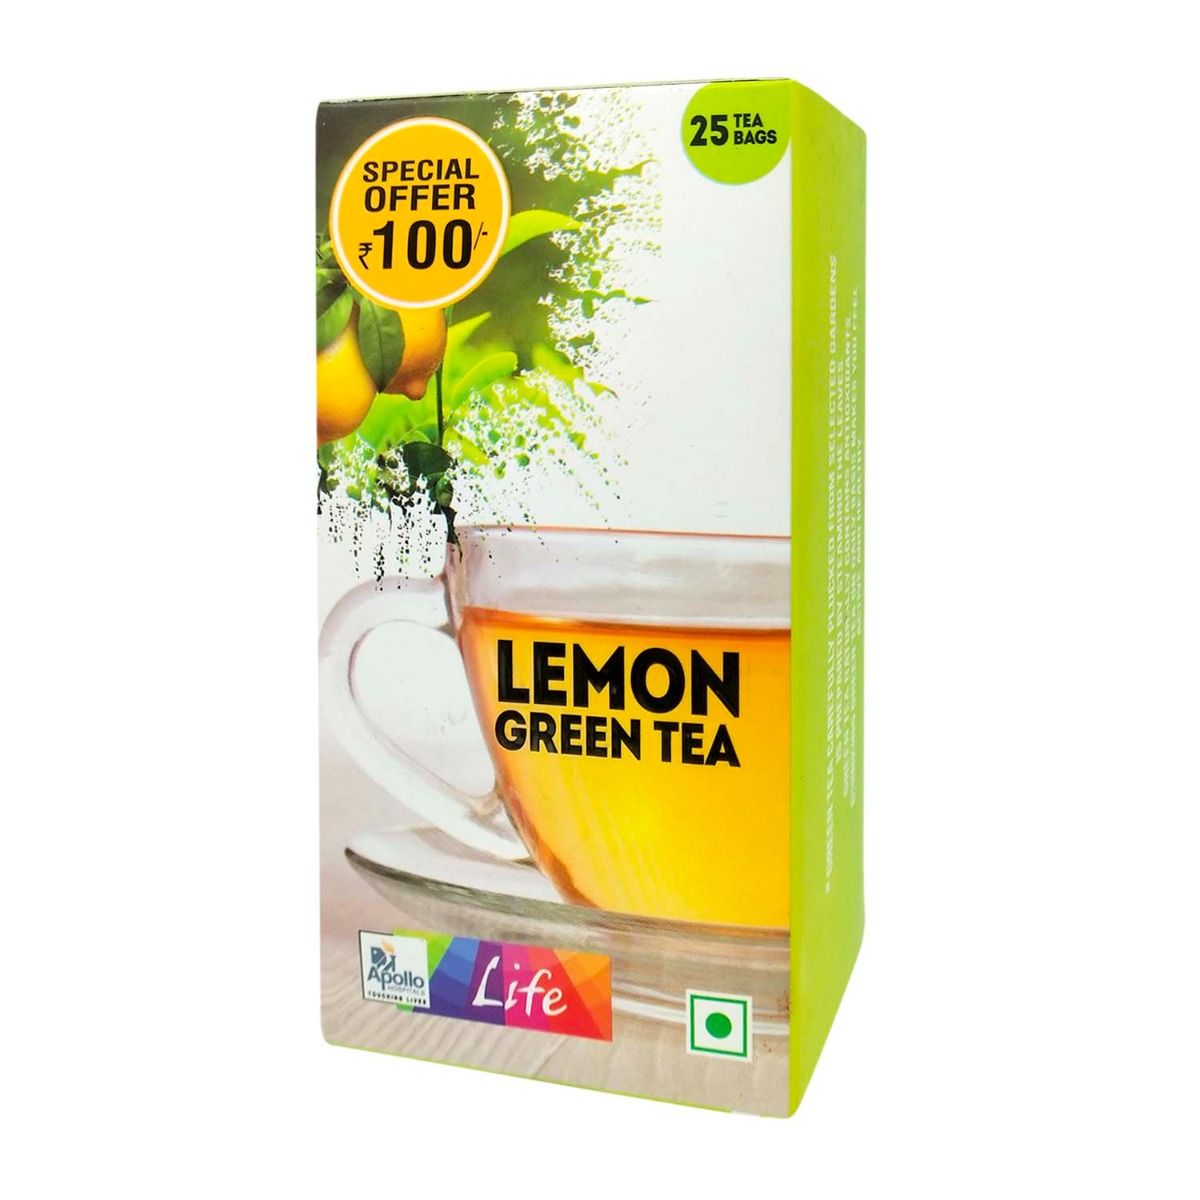 Buy Apollo Life Lemon Green Tea Bags, 25 Count Online